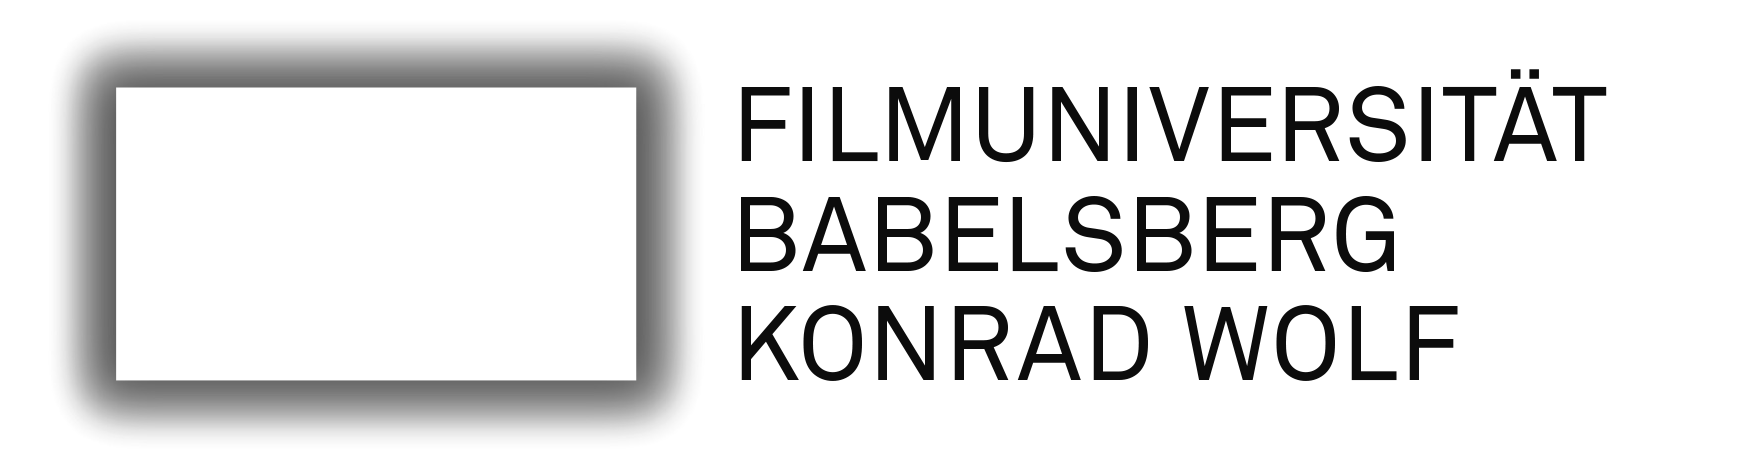 Logo_der_Filmuniversität_Babelsberg_KONRAD_WOLF